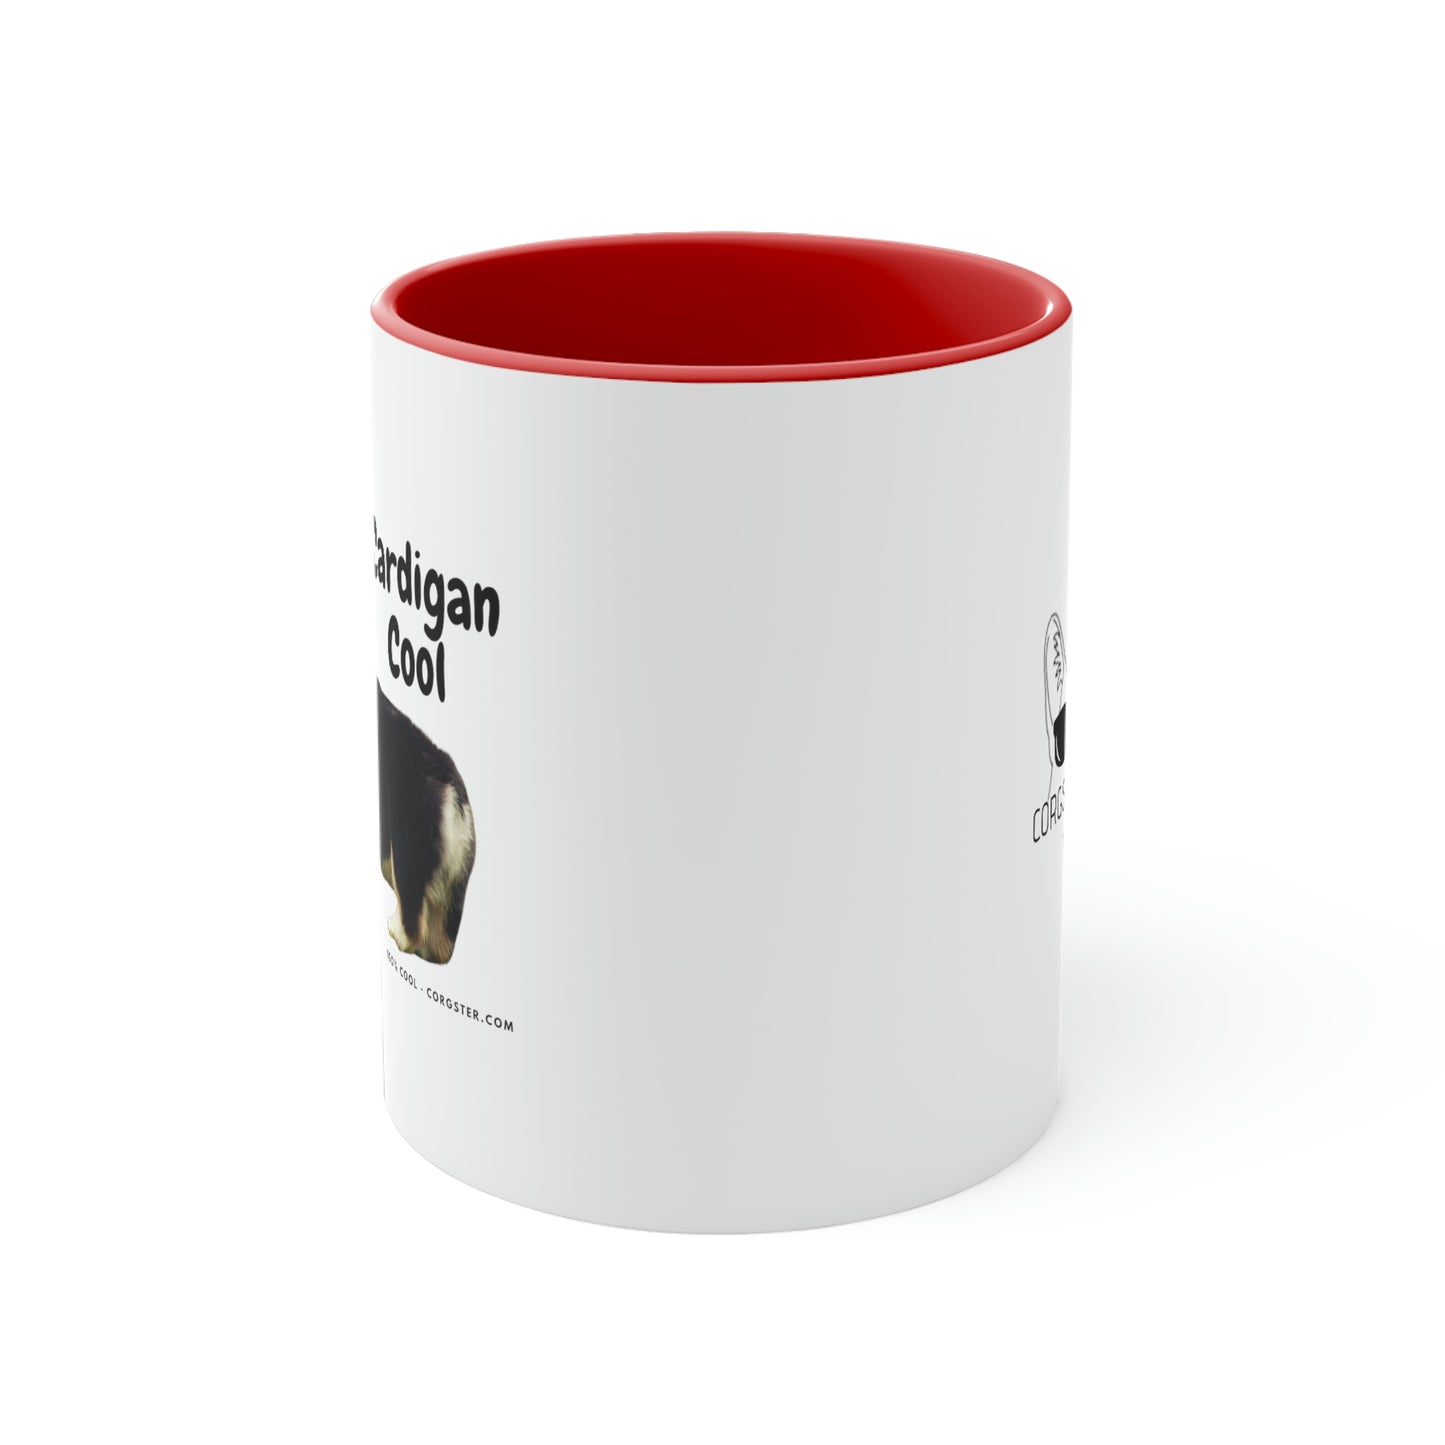 Cardigan Welsh Corgi - Cool Corgster Coffee Mug, 11oz